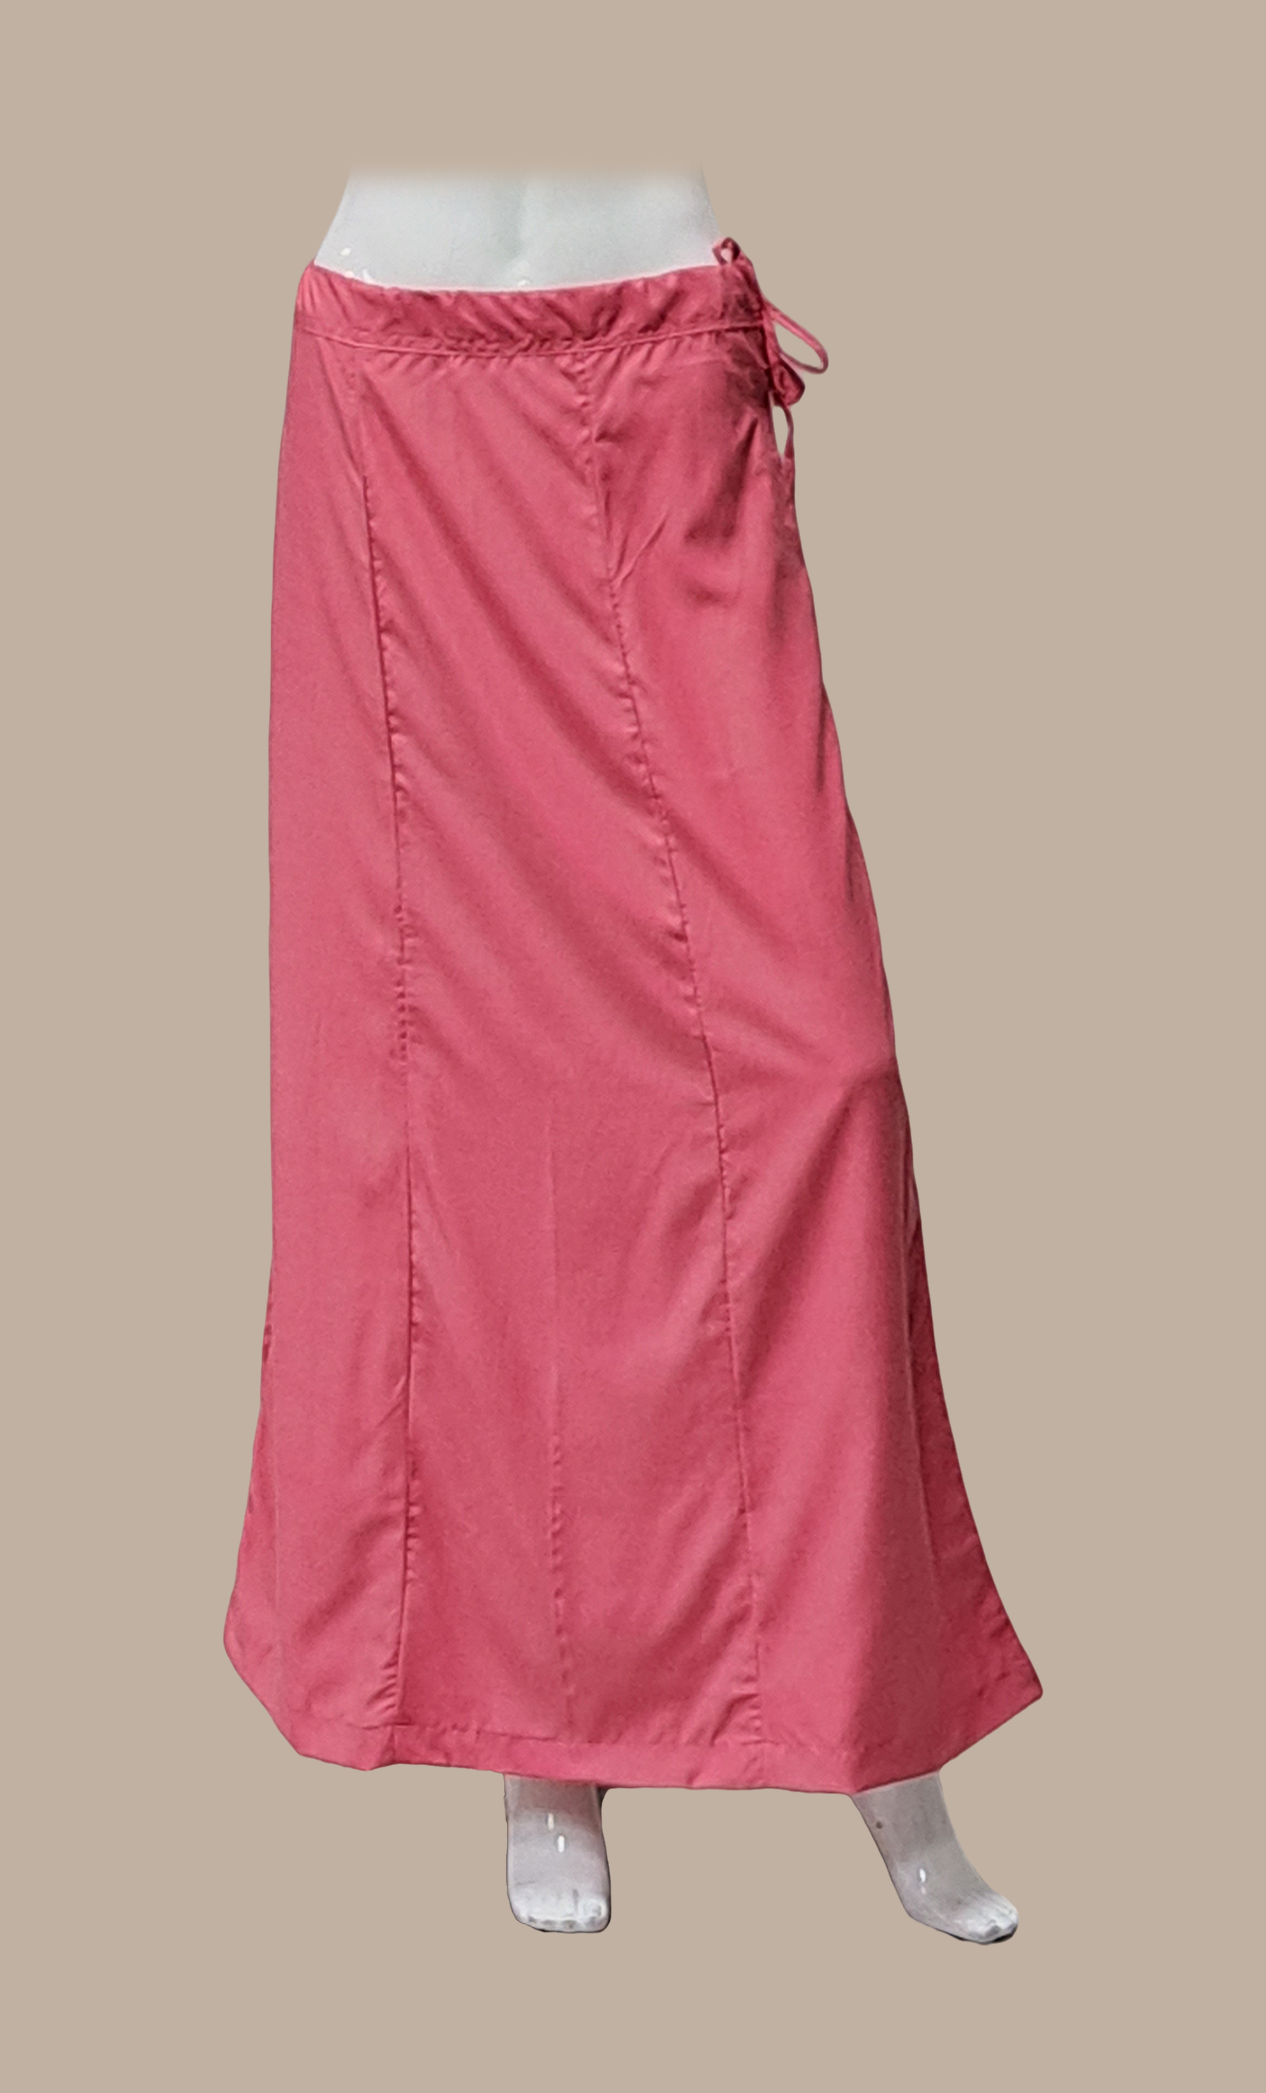 Rose Pink Cotton Under Skirt